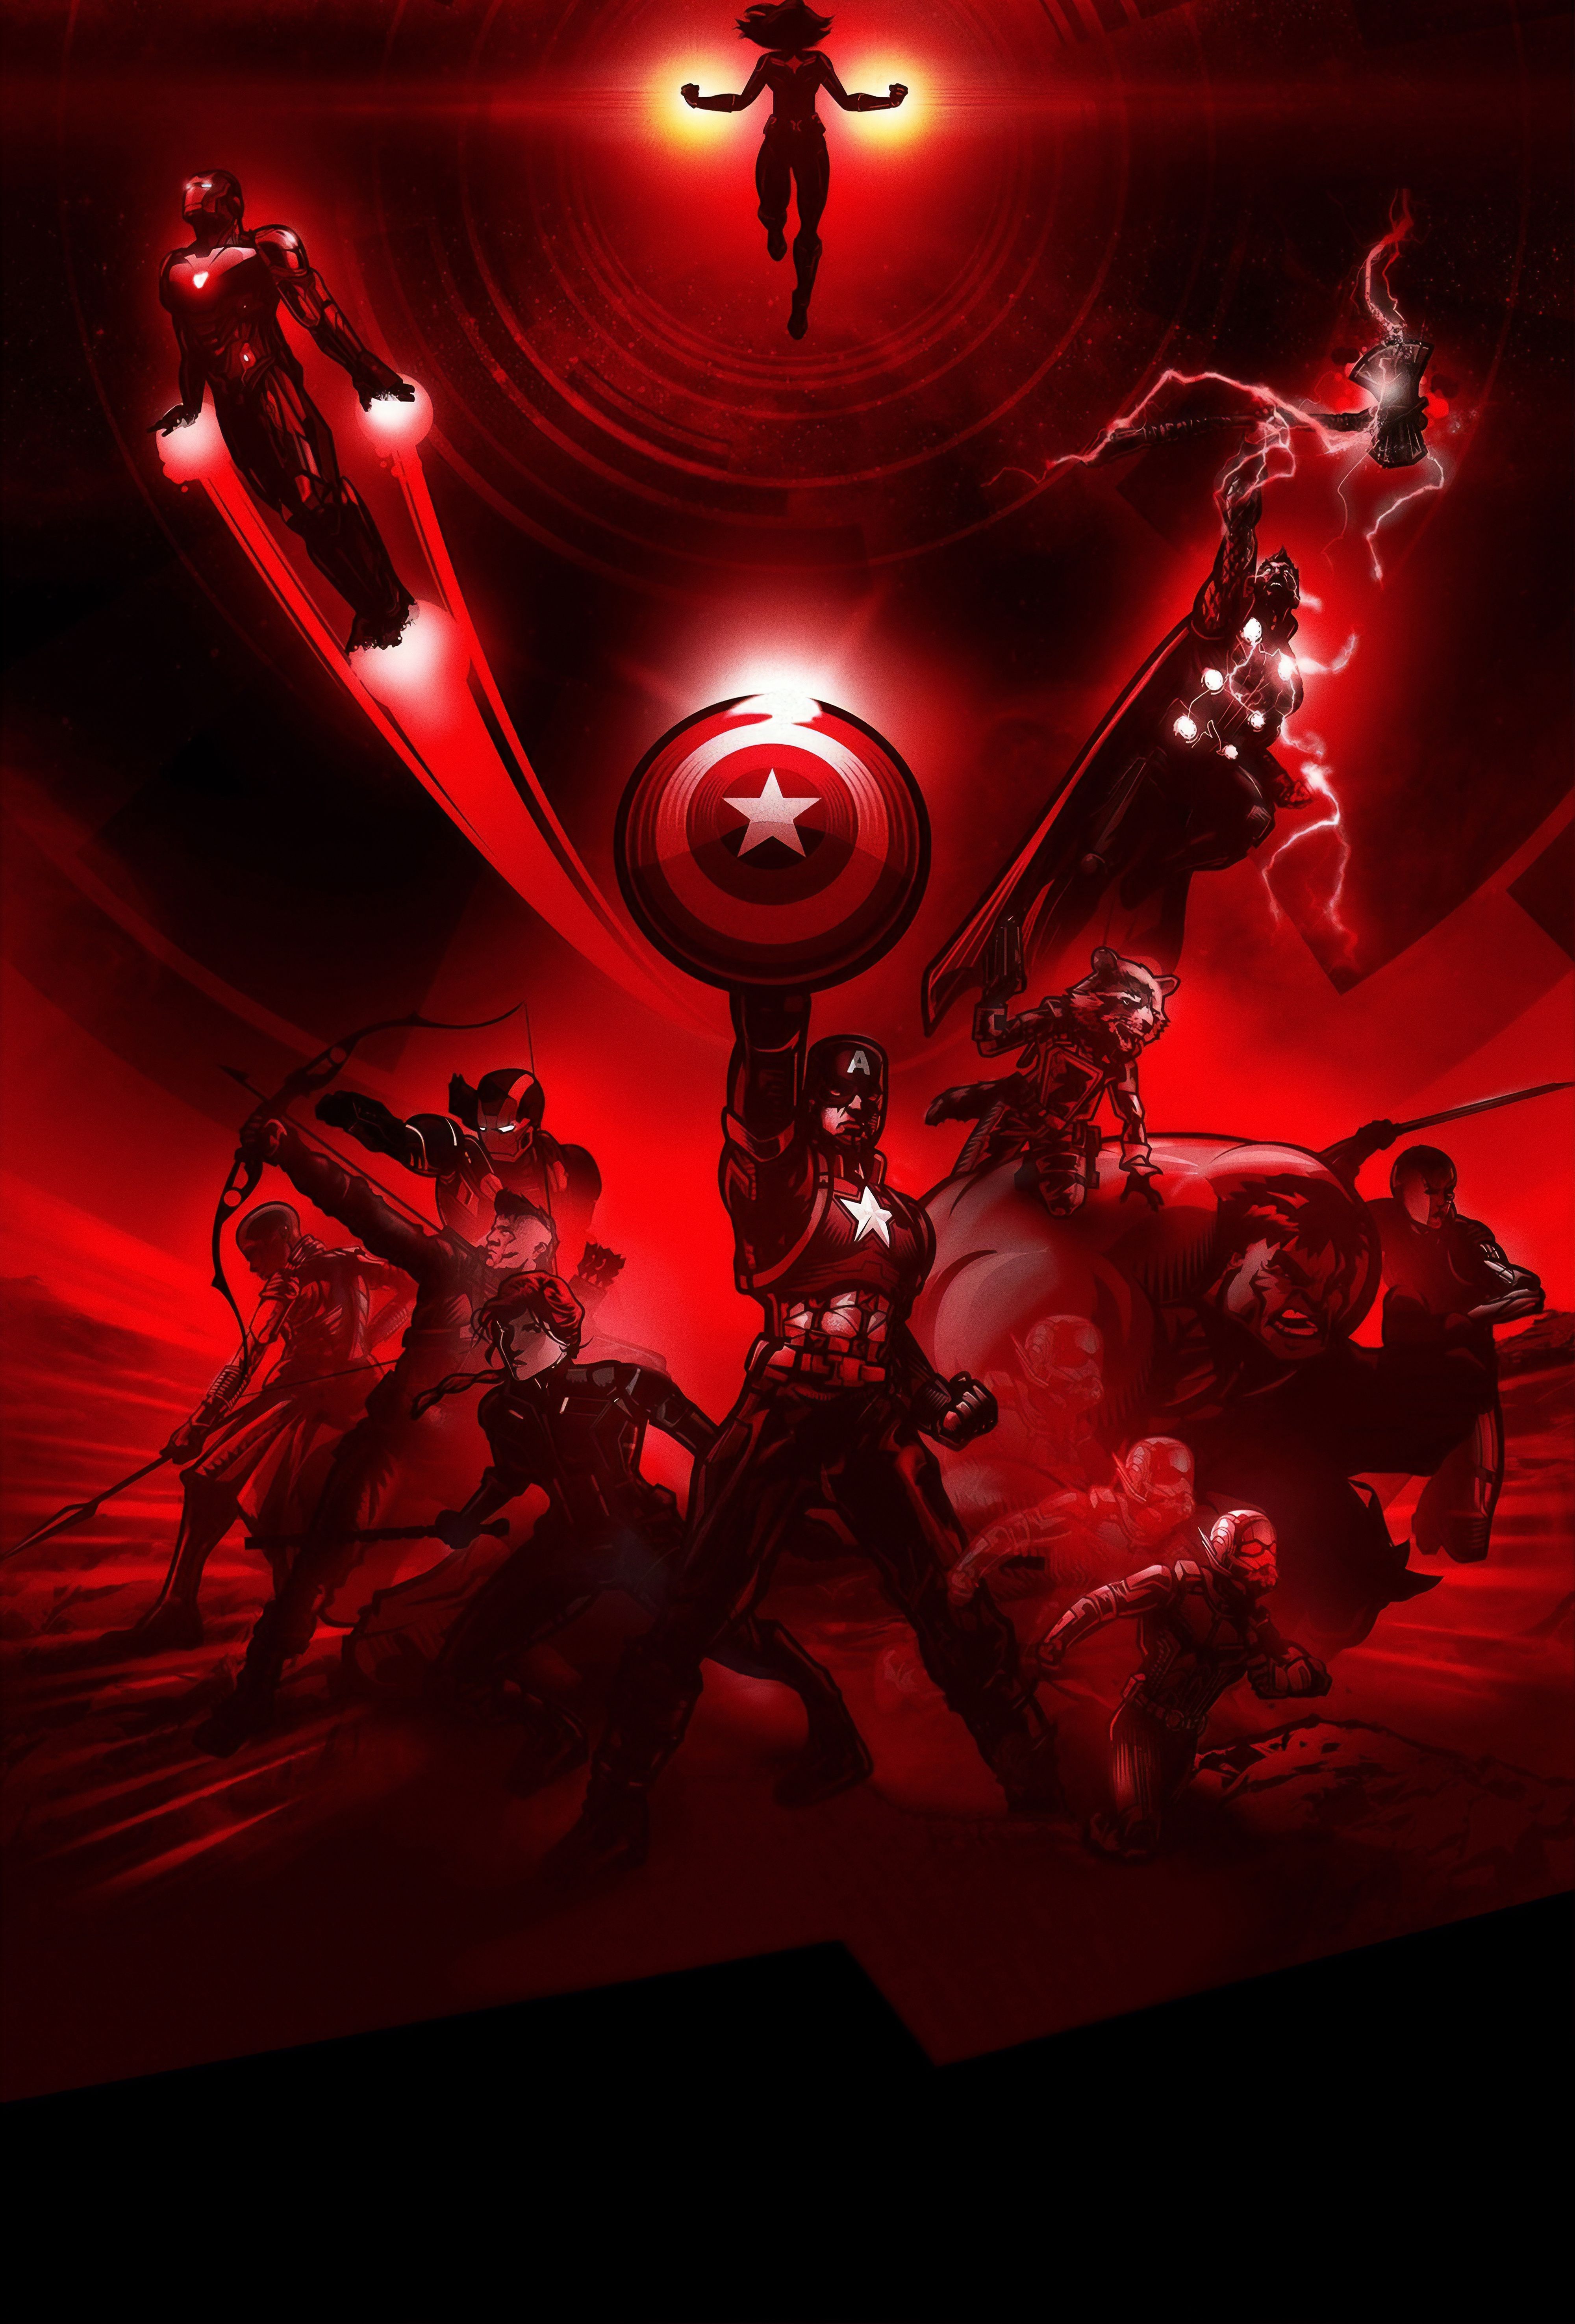 Wallpaper Avengers: Endgame, Marvel Superheroes, 4K, Movies,. Wallpaper for iPhone, Android, Mobile and Desktop